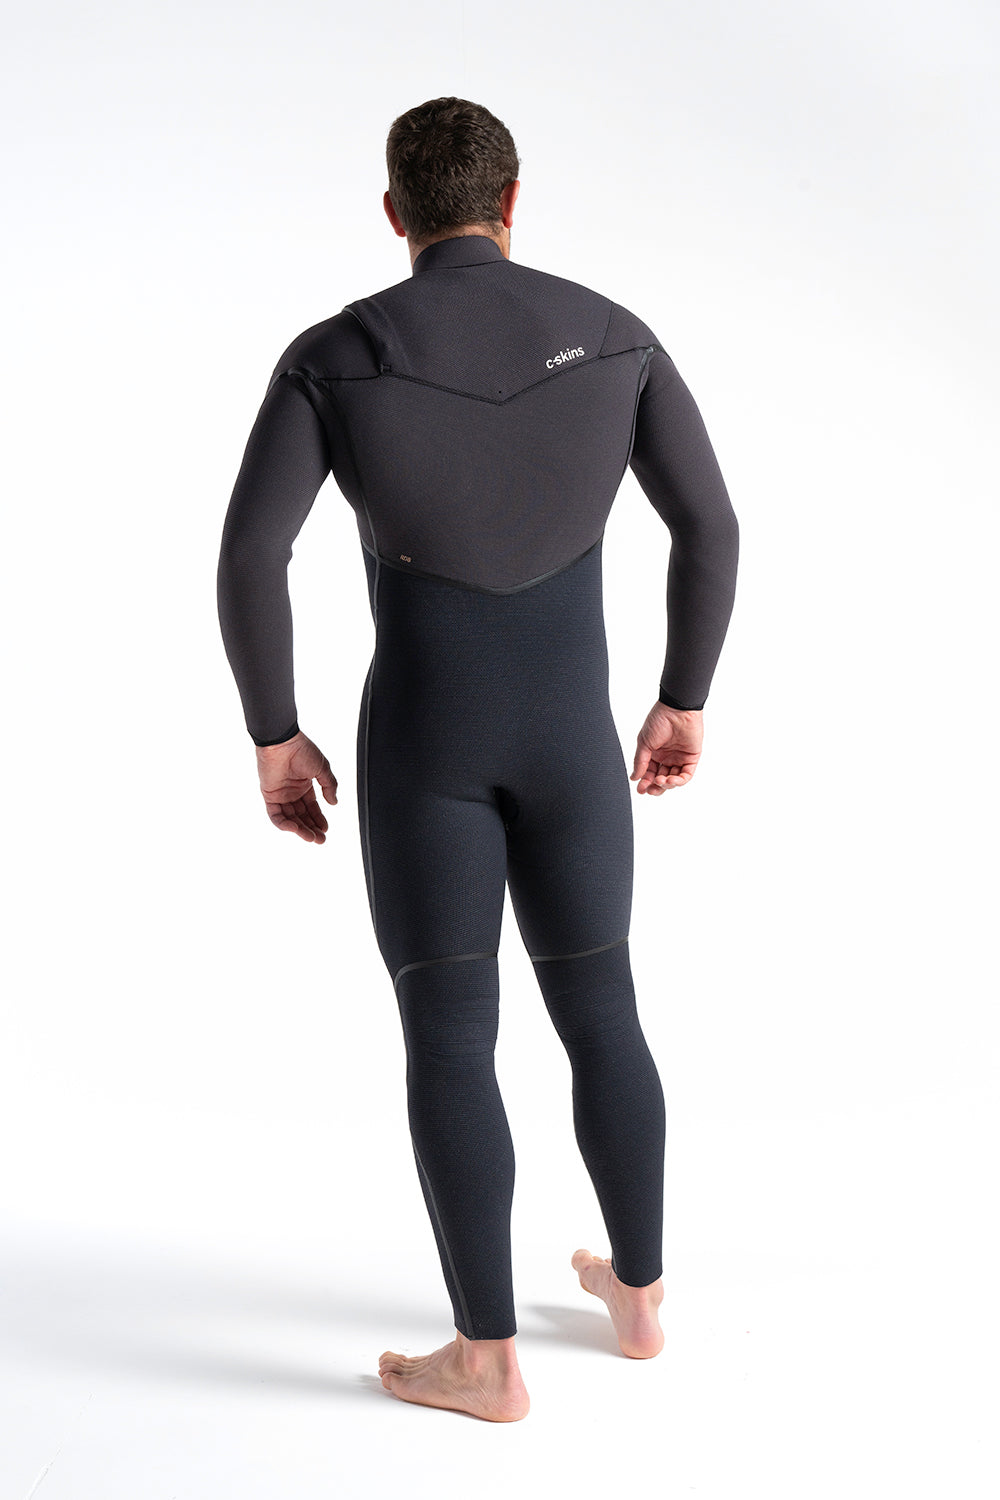 c-skins-wired-chest-zip-5-4-liquid-seams-halo-x-db8-winter-wetsuit-galway-ireland-blacksheepsurfco-back